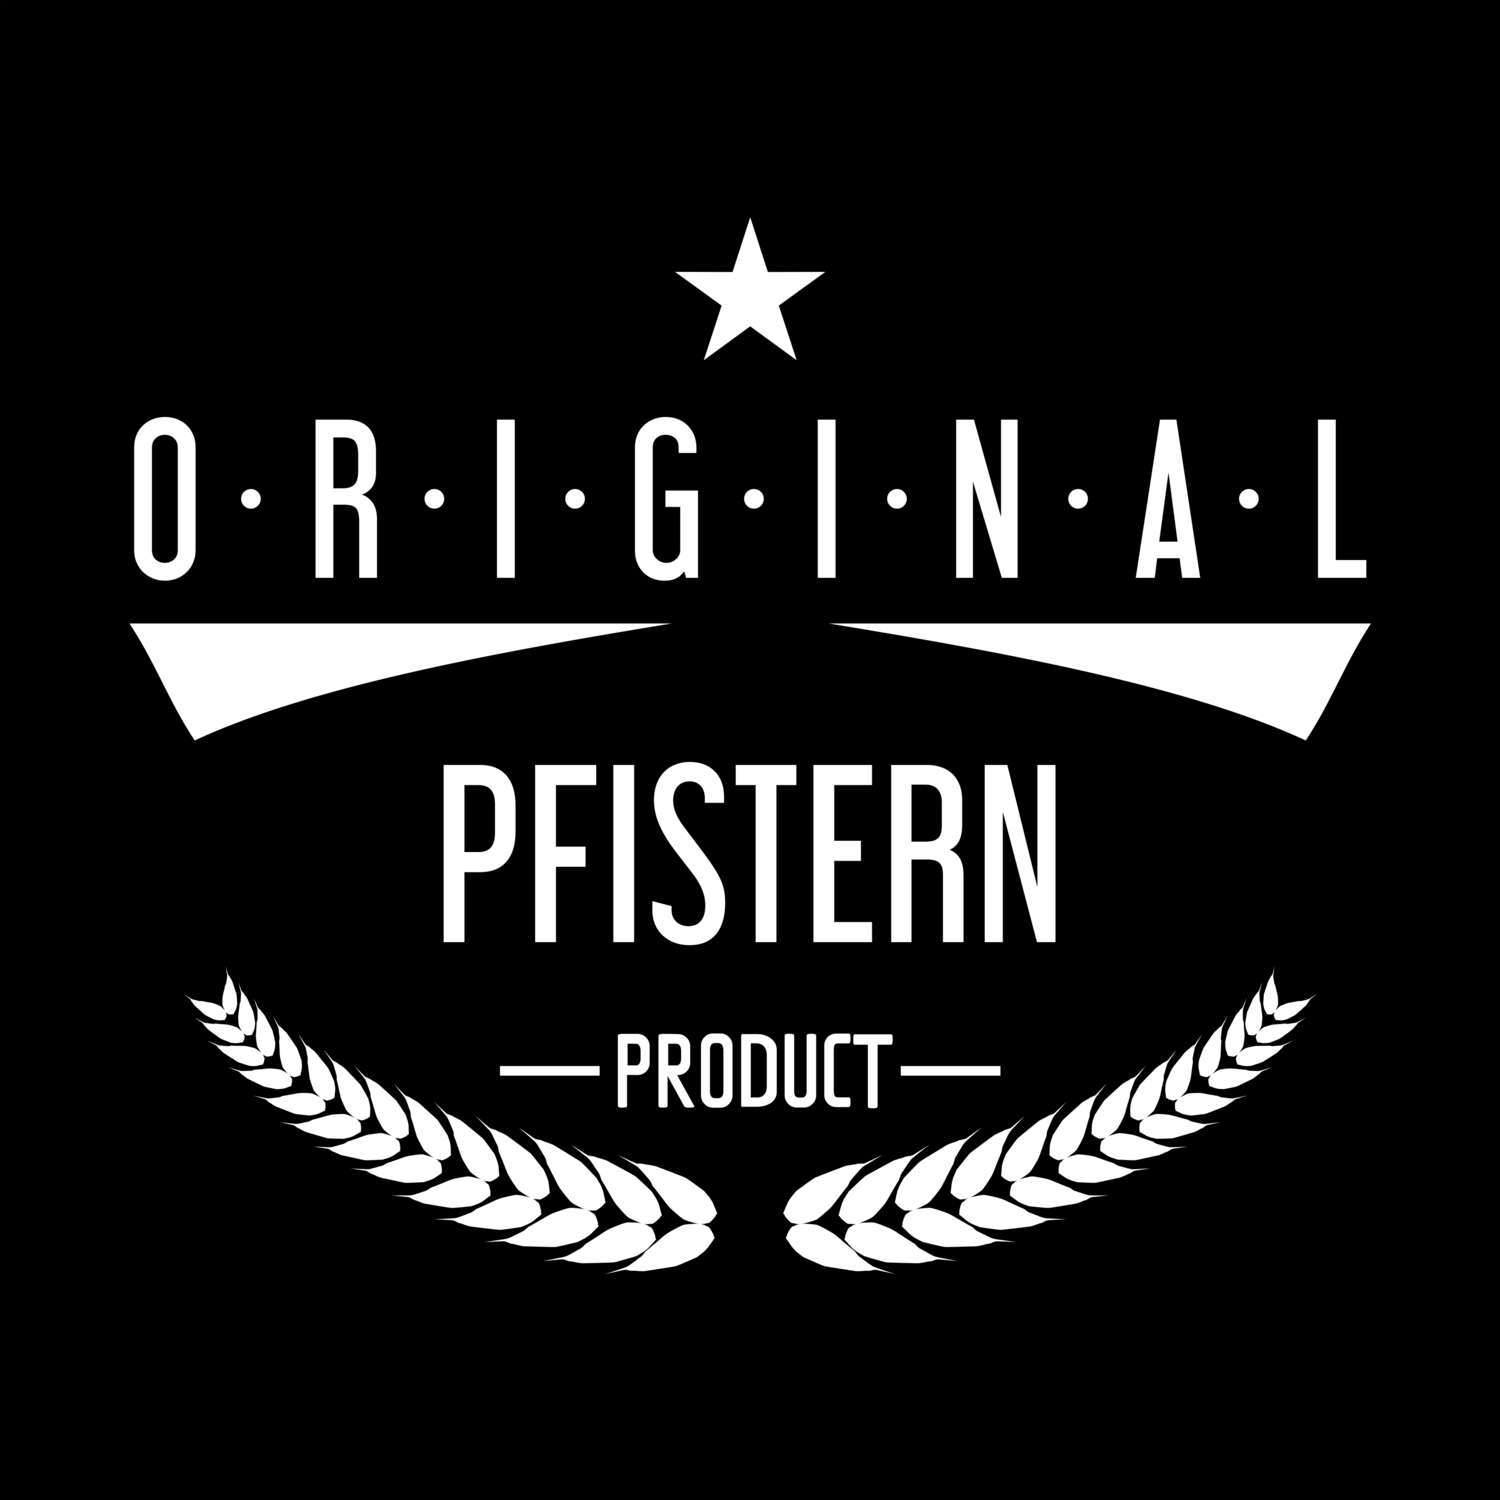 Pfistern T-Shirt »Original Product«